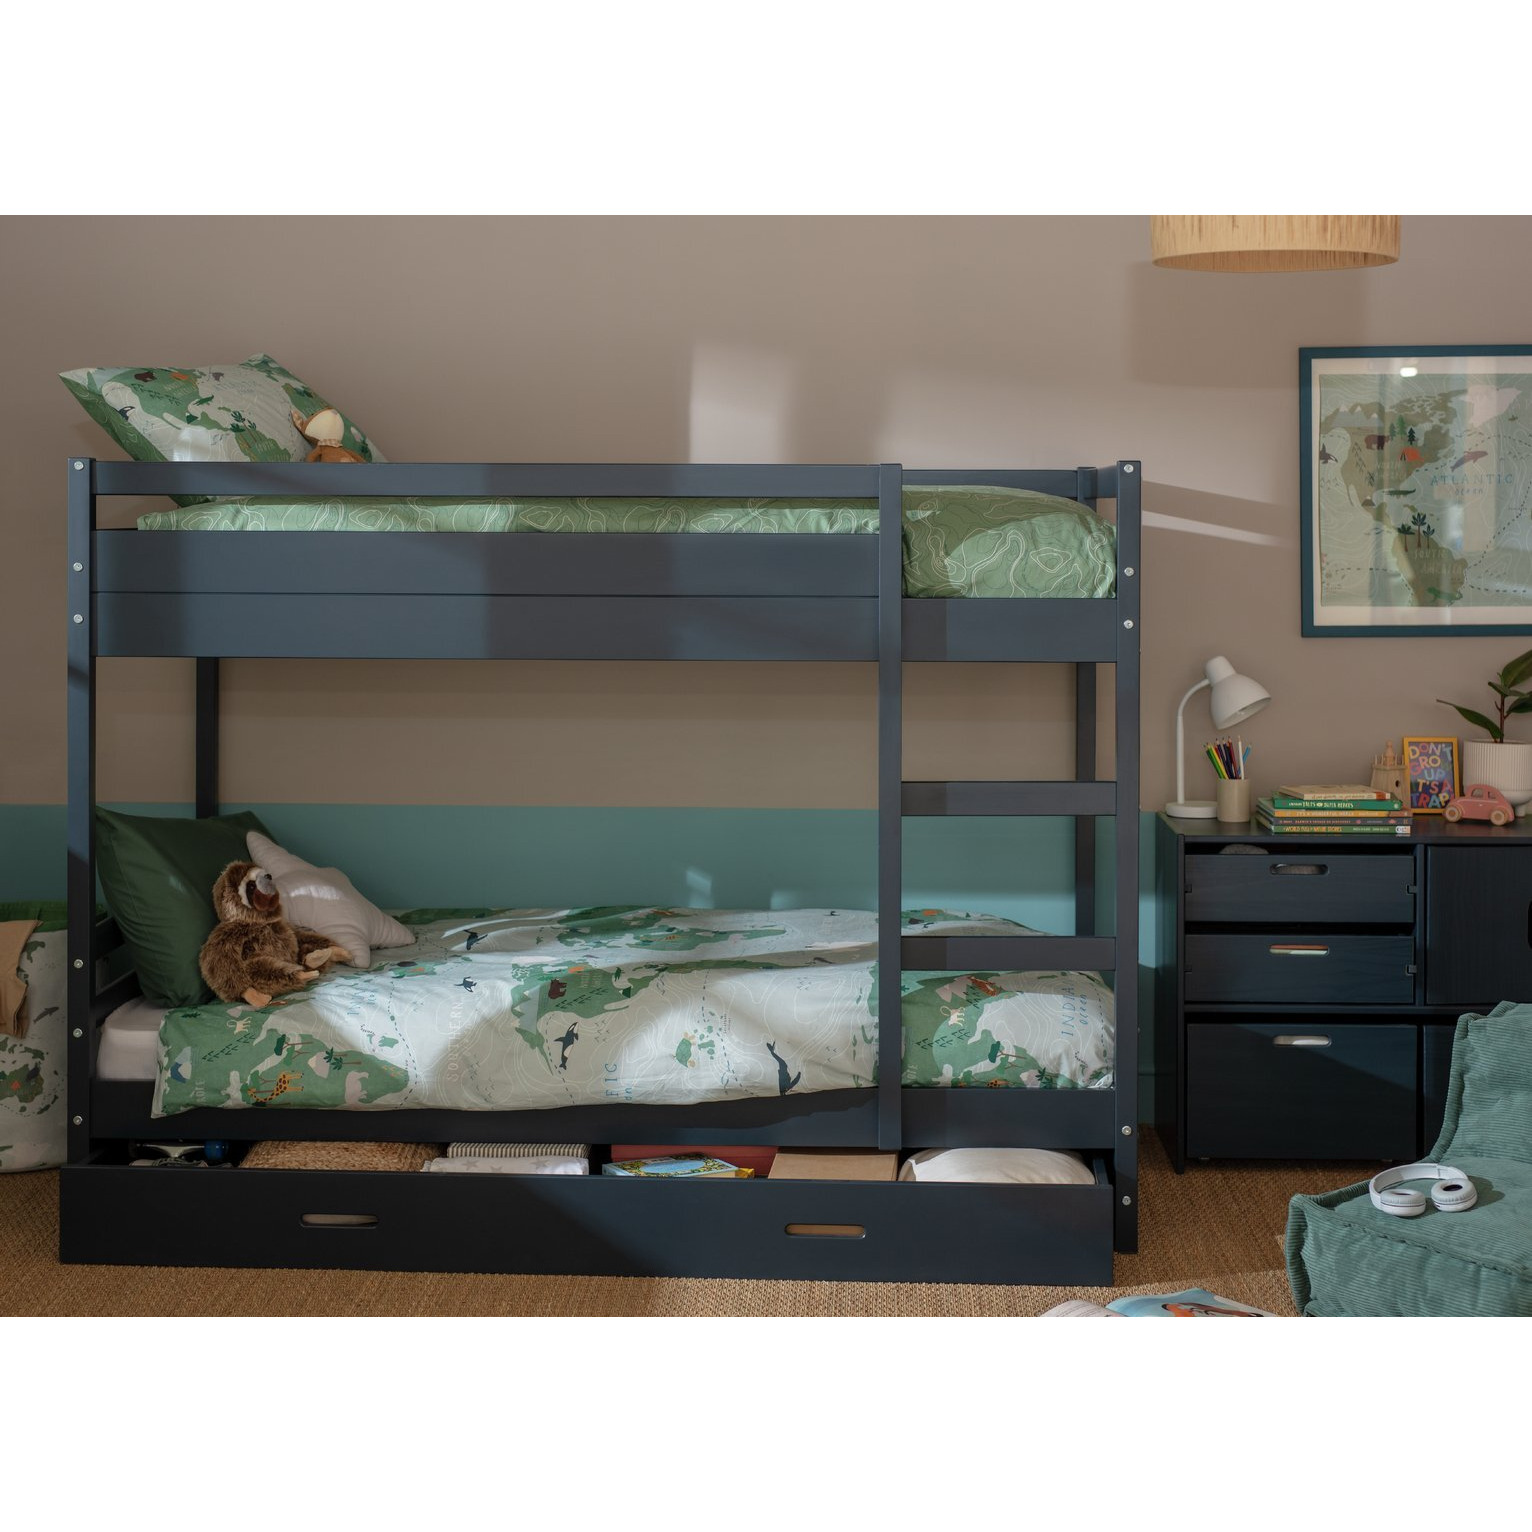 Habitat Rico Bunk Bed Frame With Drawer - Blue - image 1